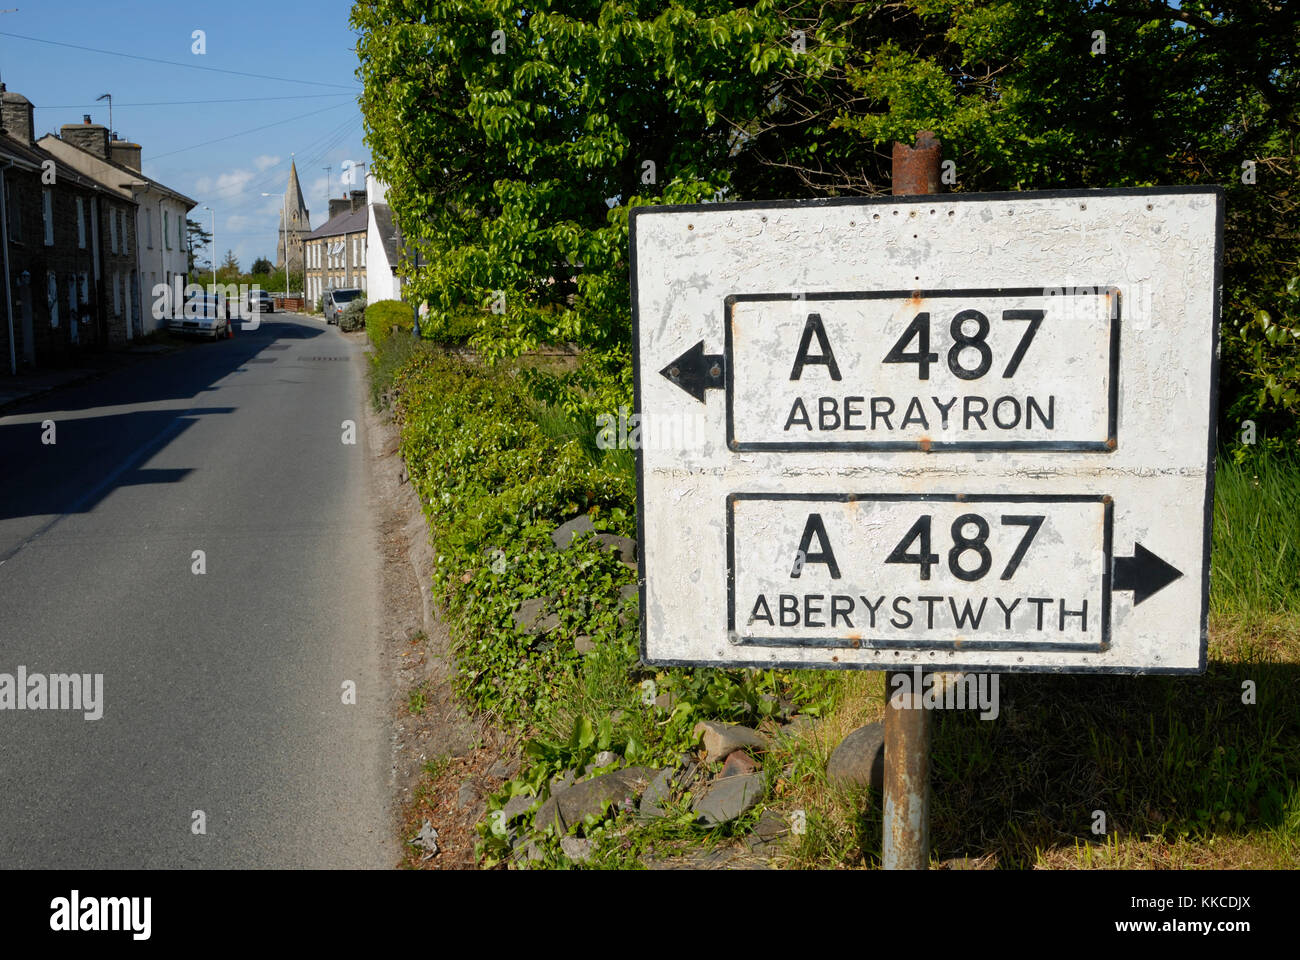 Signpost in Llanrhystud village using anglicised spelling of Aberaeron (Aberayron), Wales, UK. Stock Photo